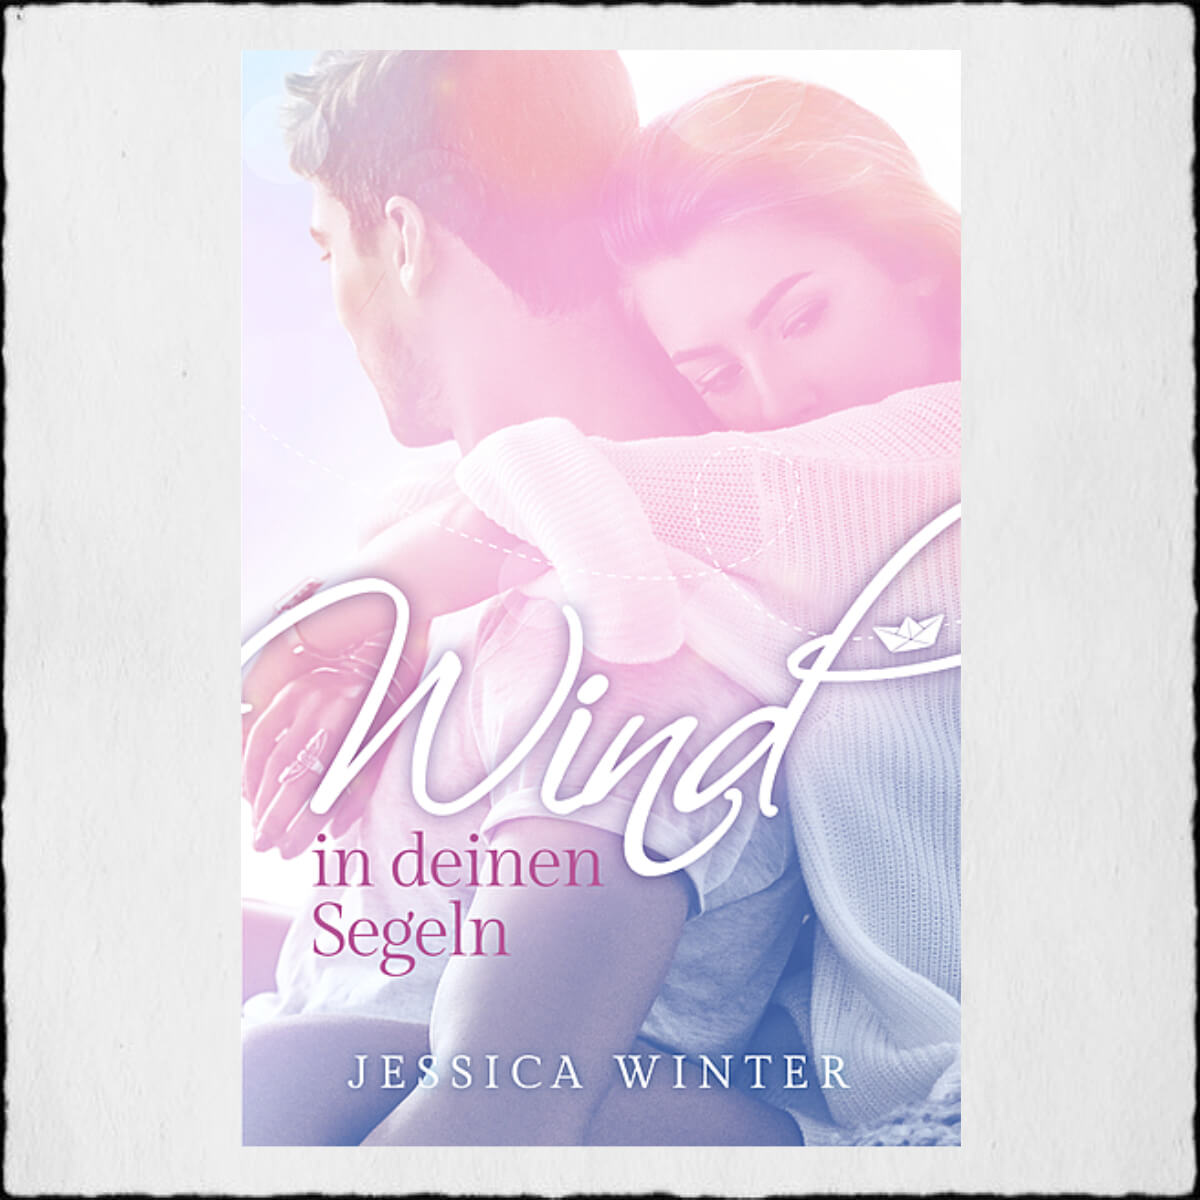 Cover: Jessica Winter - "Wind in deinen Segeln" © 2019, Jessica Winter, Selbstpublikation